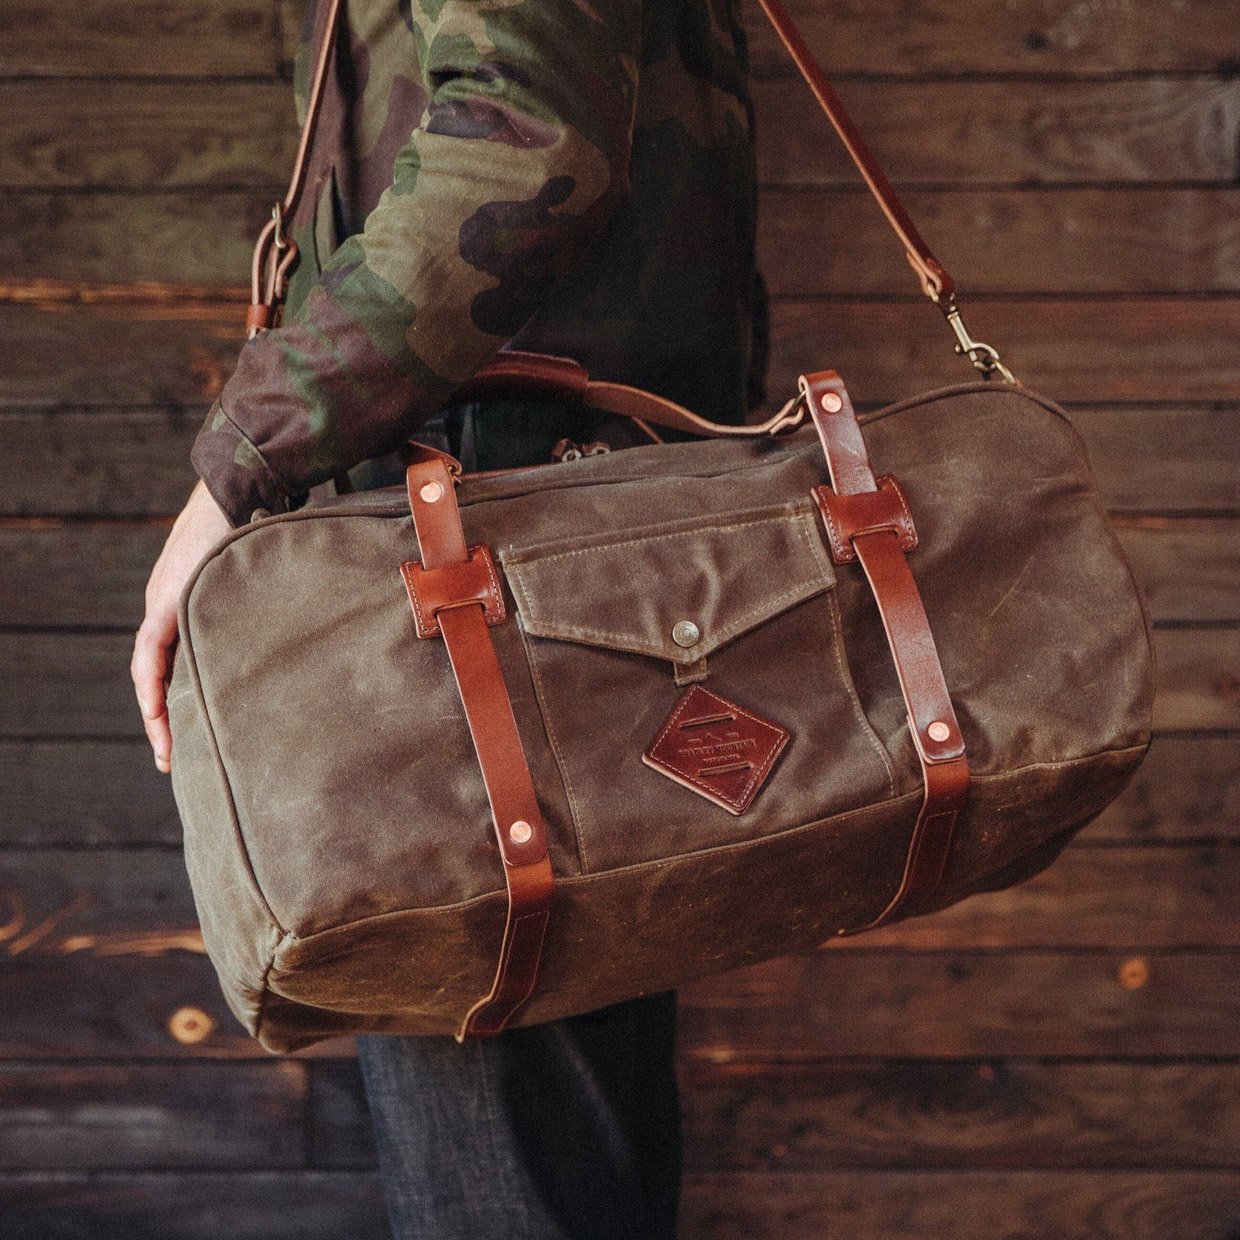 The Bradley Mountain Ranger Duffel Bag Is a Rugged Weekender